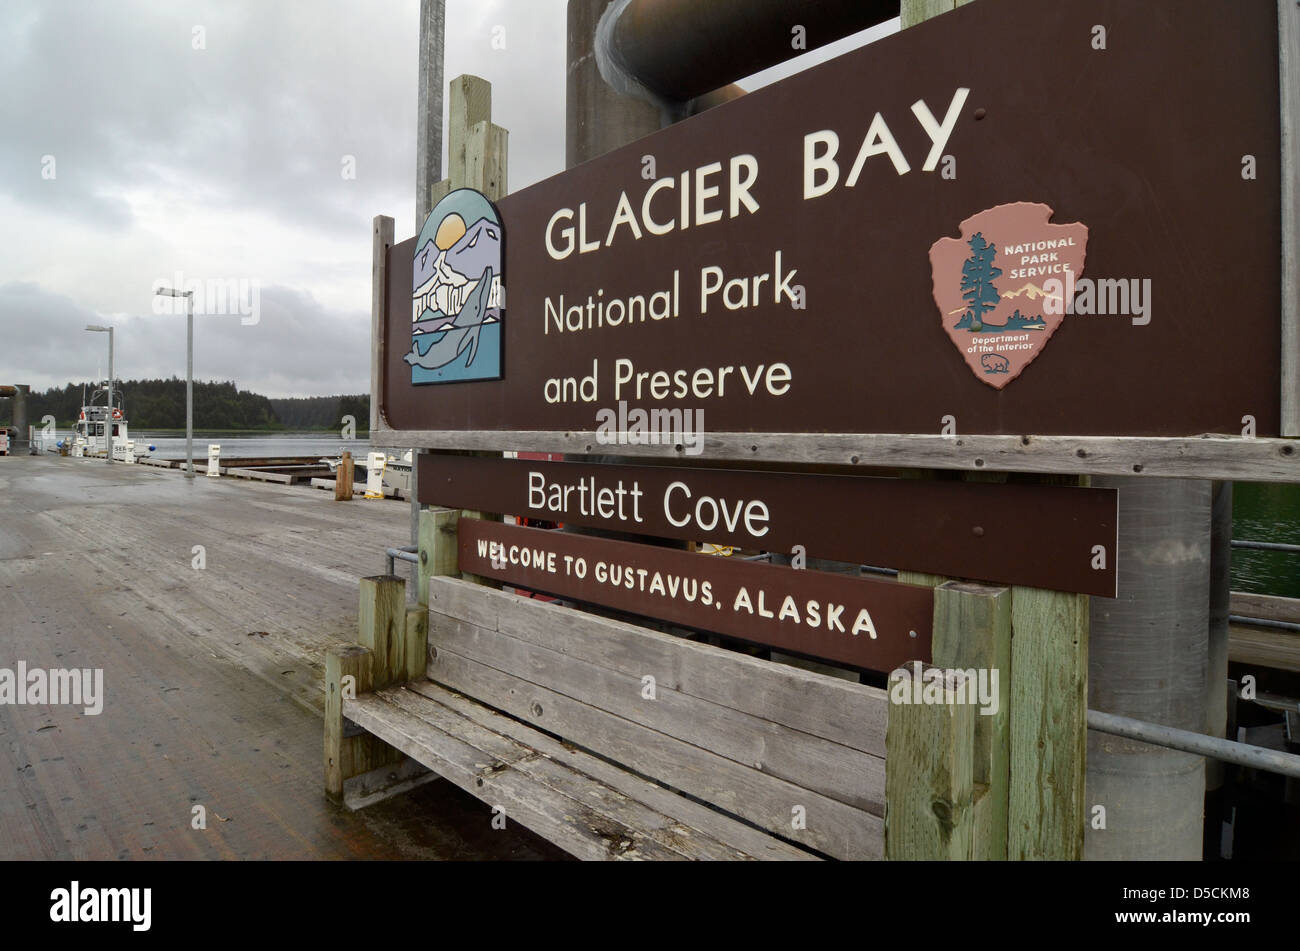 National Park Service sign on the dock at Bartlett Cove in Glacier Bay National Park, Alaska. Stock Photo